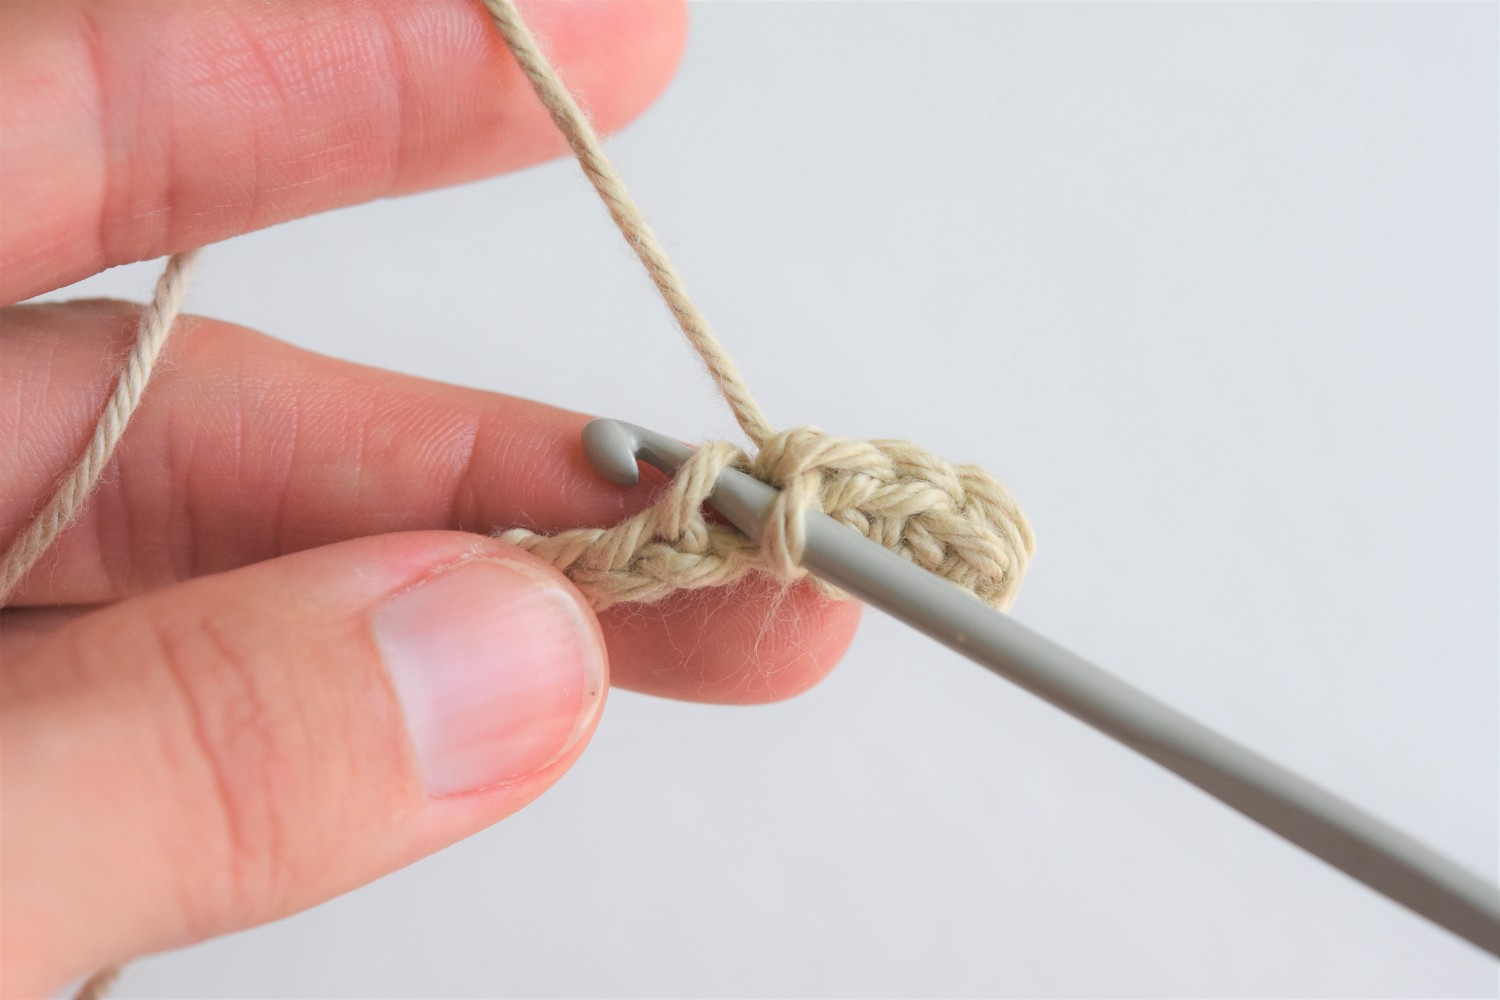 insert crochet hook through stitch